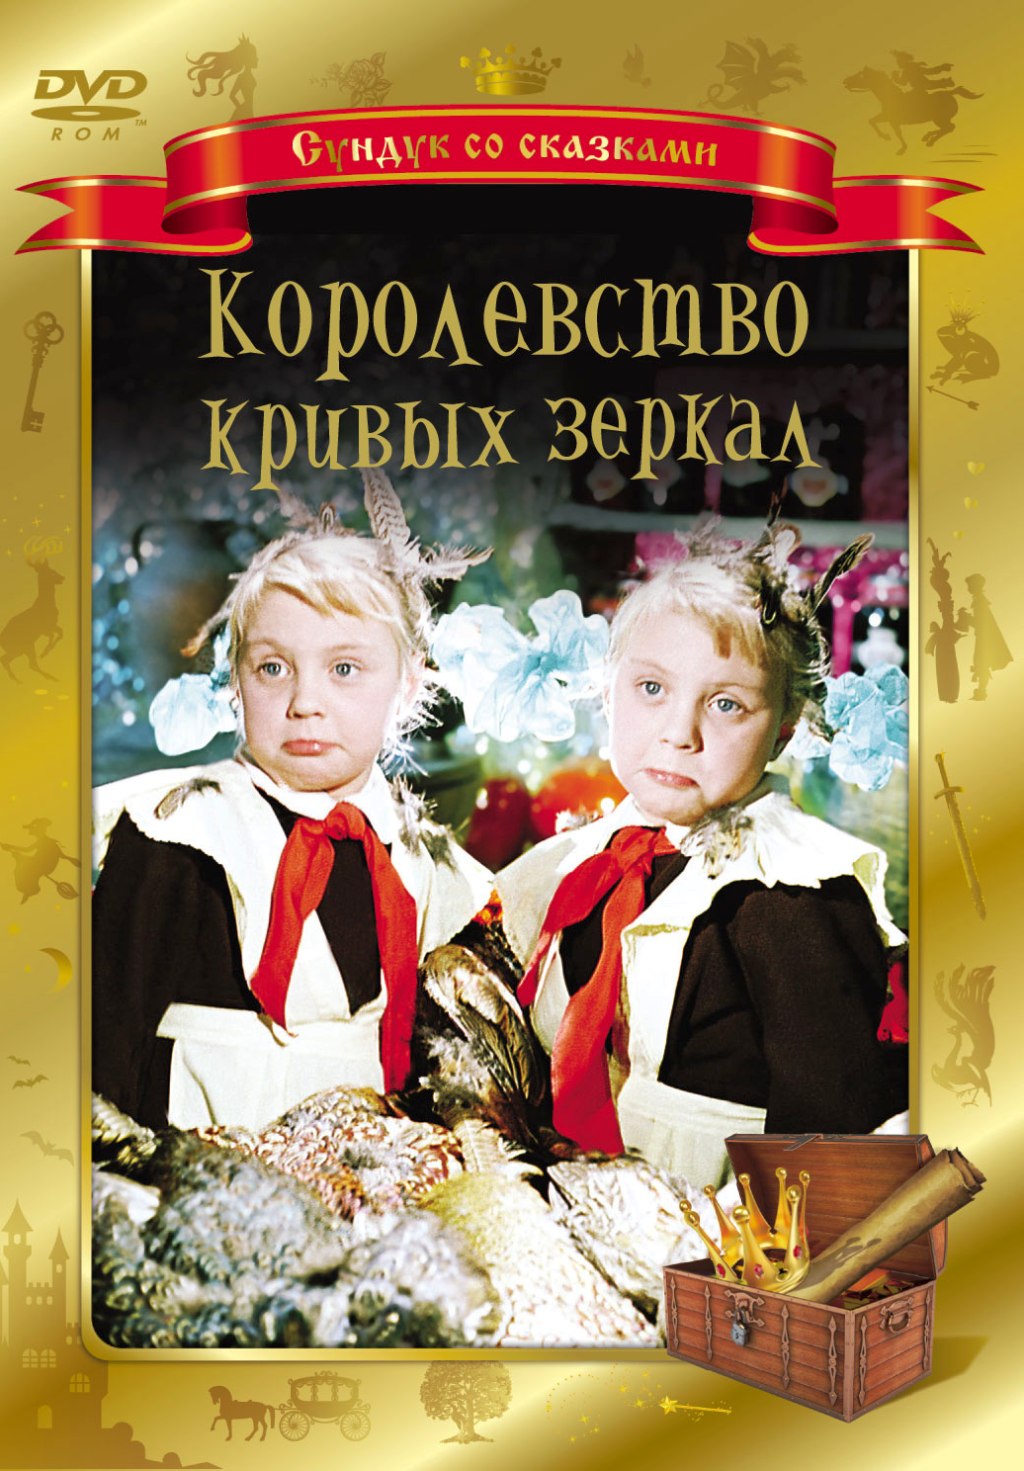 Королевство кривых зеркал (DVD)